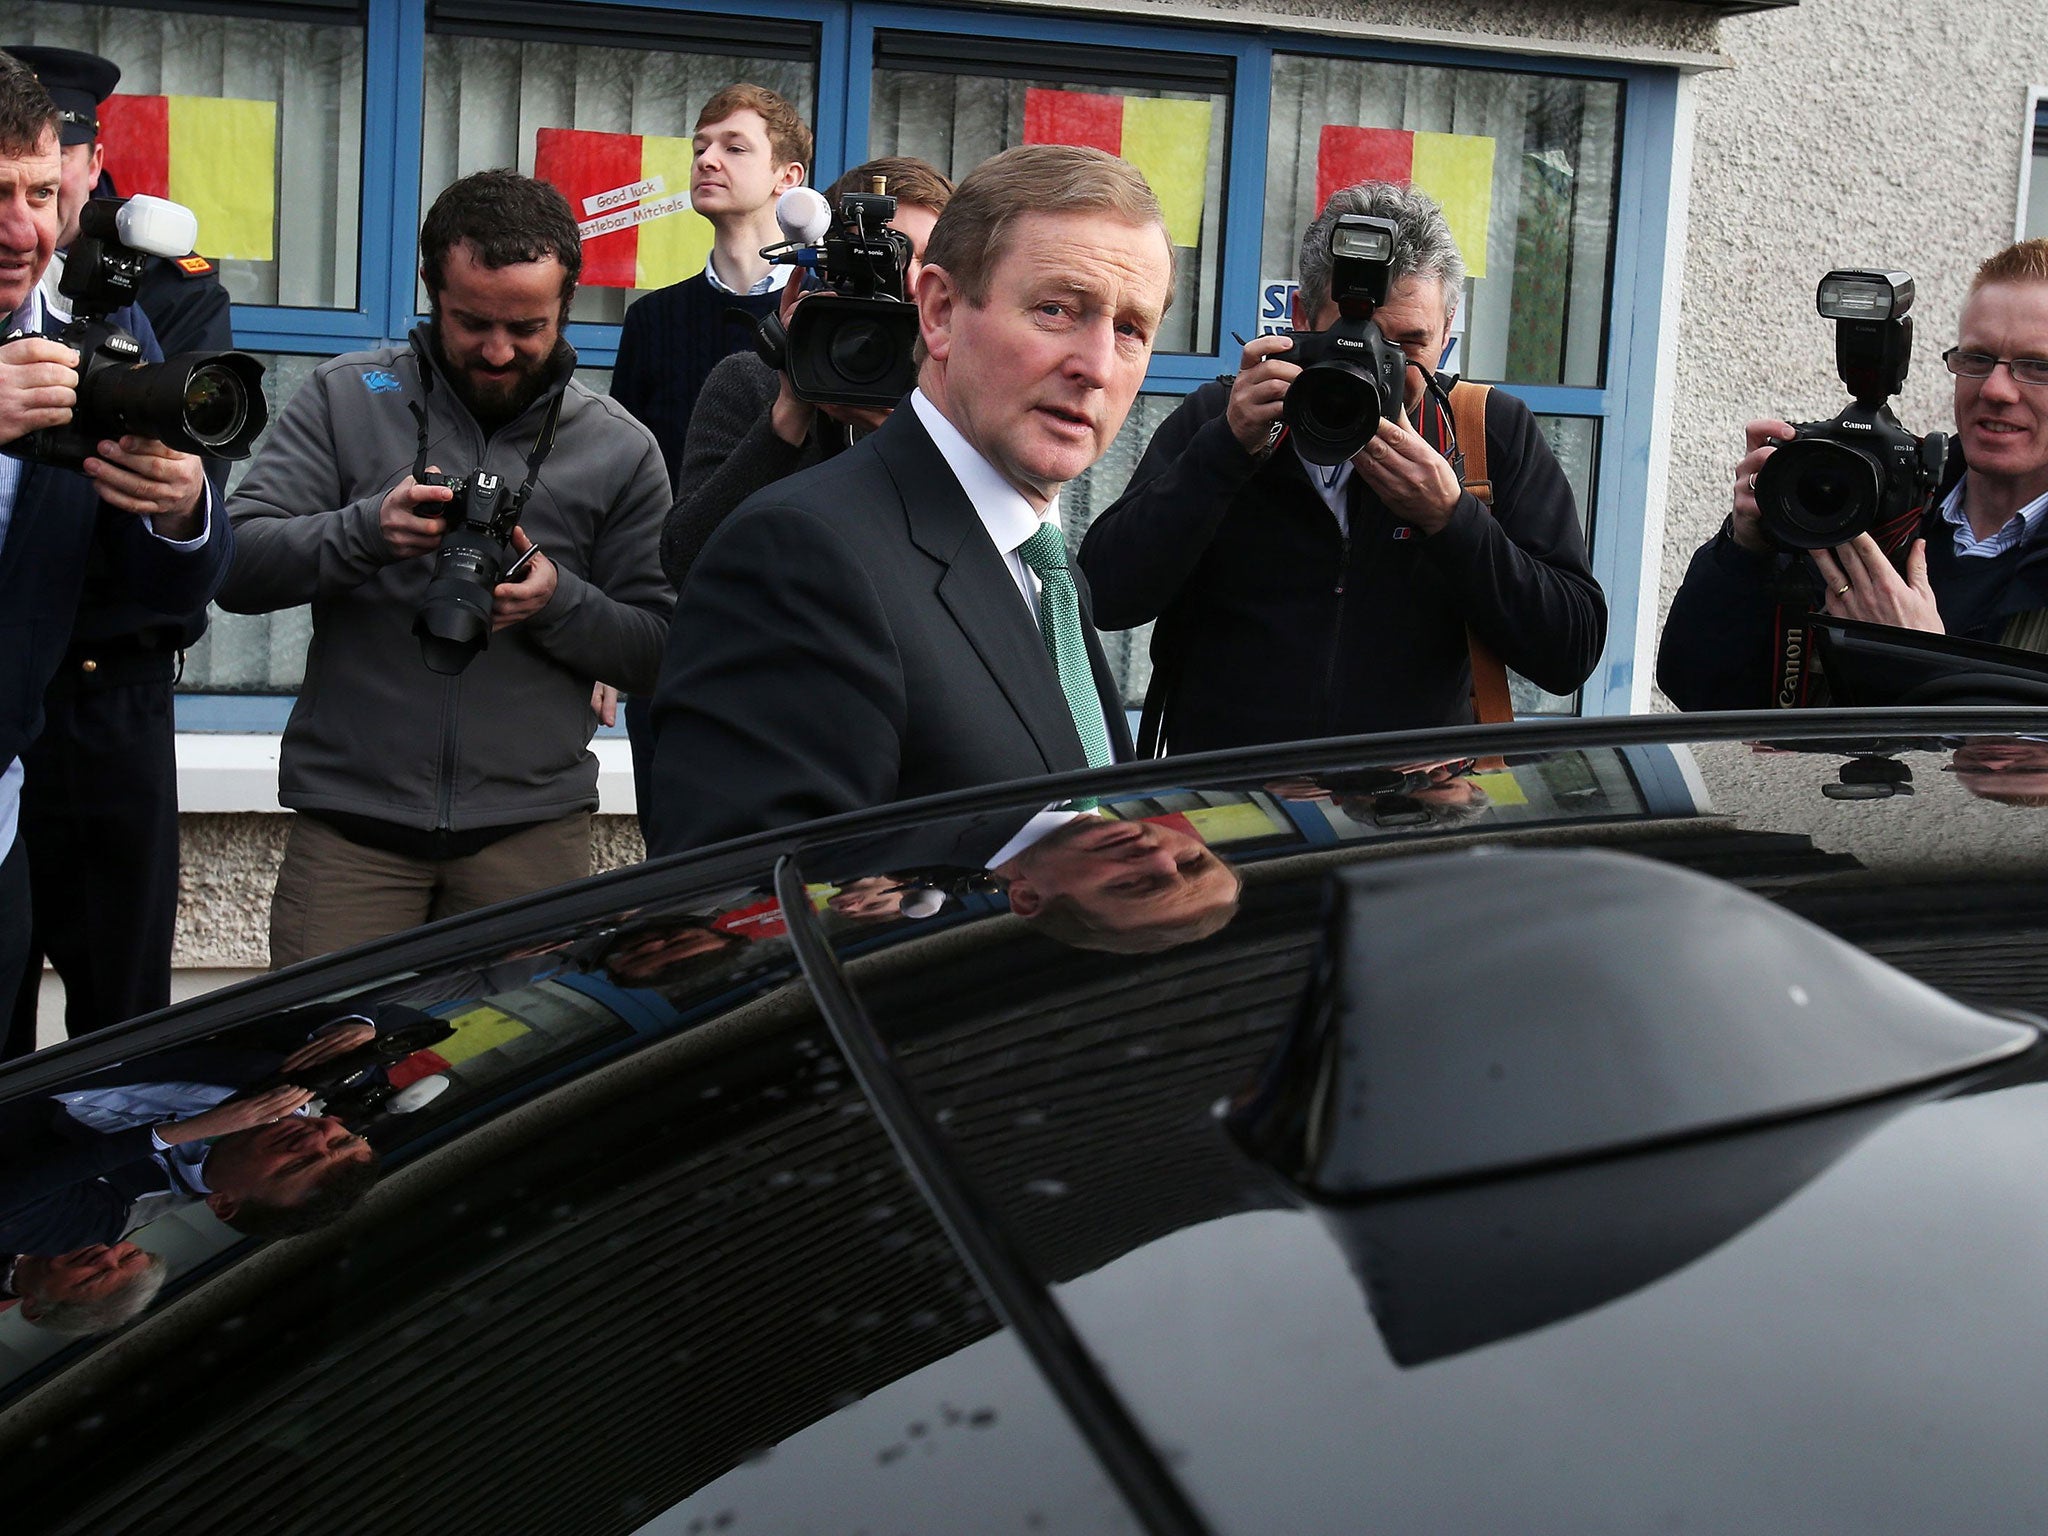 Irish Taoiseach Enda Kenny leaves the polling station in Castlebar, Mayo